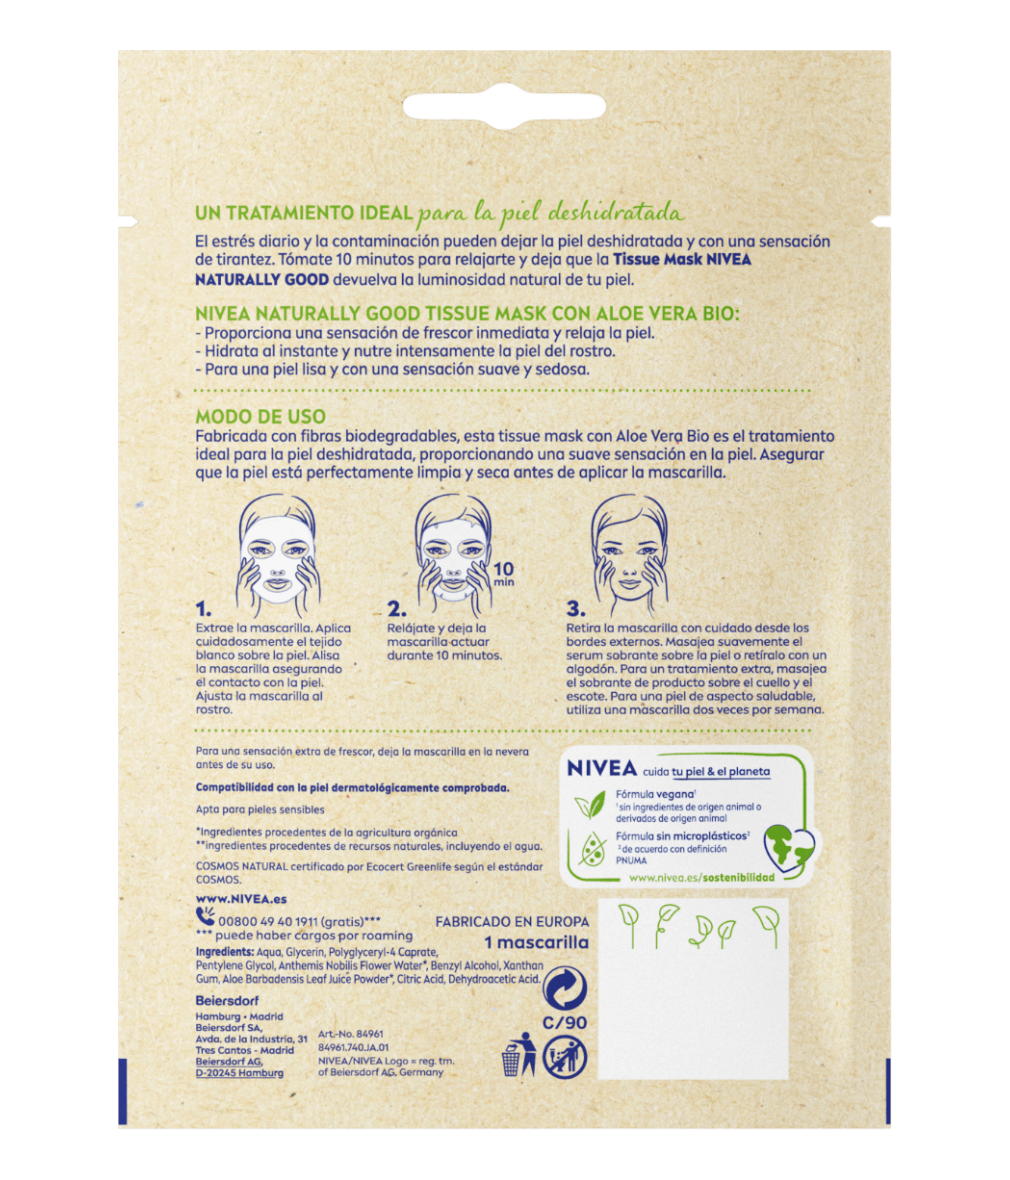 Naturally Good Tissue Mask Aloe Vera Bio | NIVEA